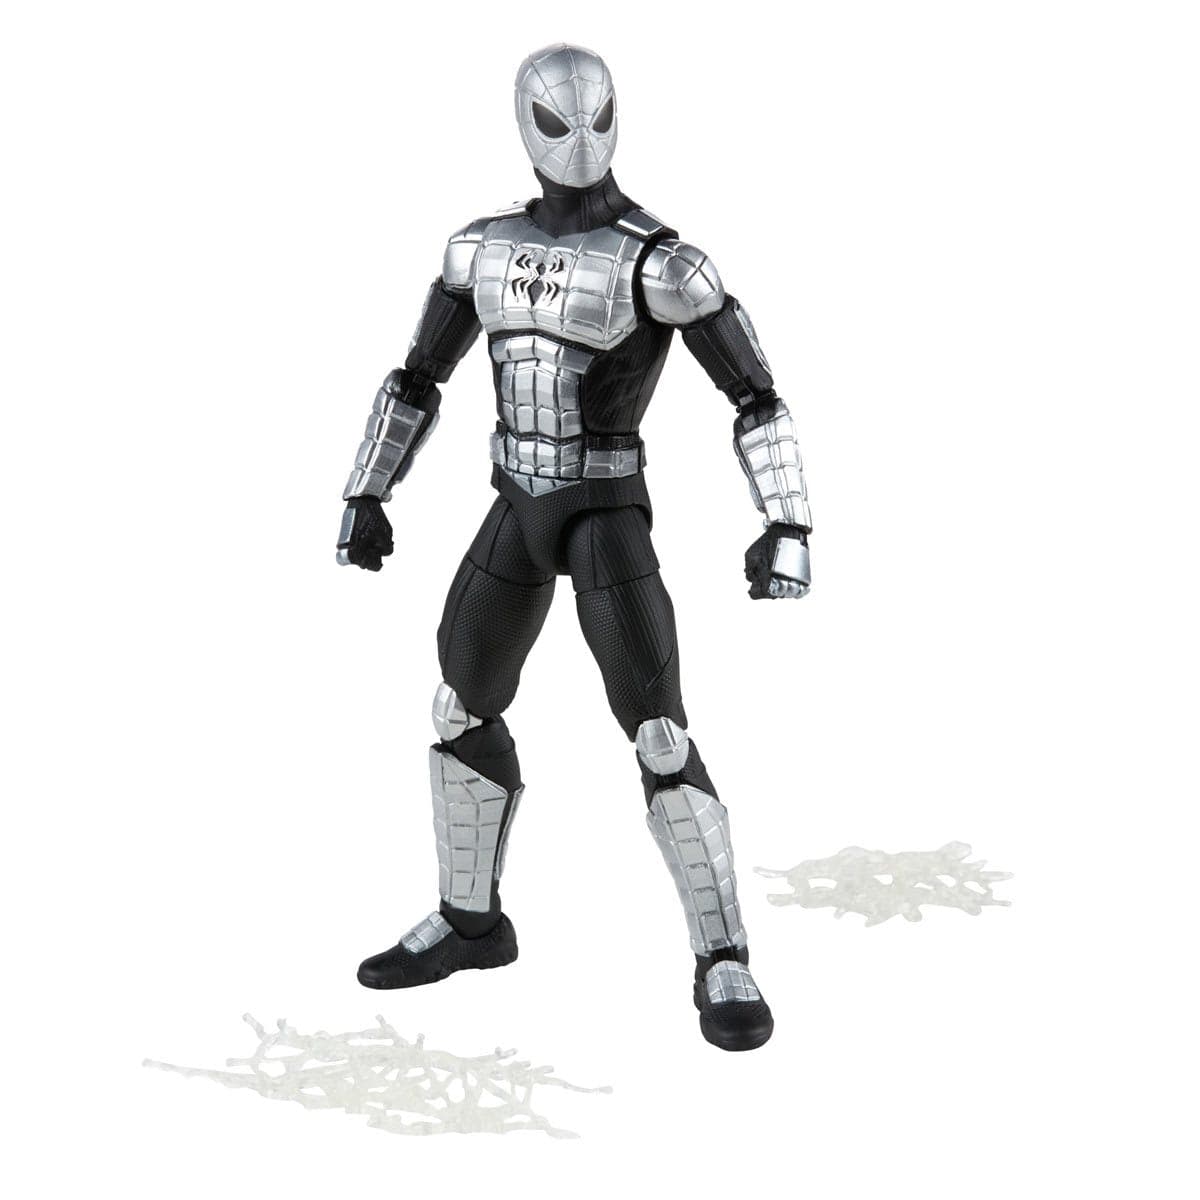 Spider-Man Retro Marvel Legends Legends Spider-Armor MK I 6-inch Action Figure - Pop-O-Loco - Hasbro